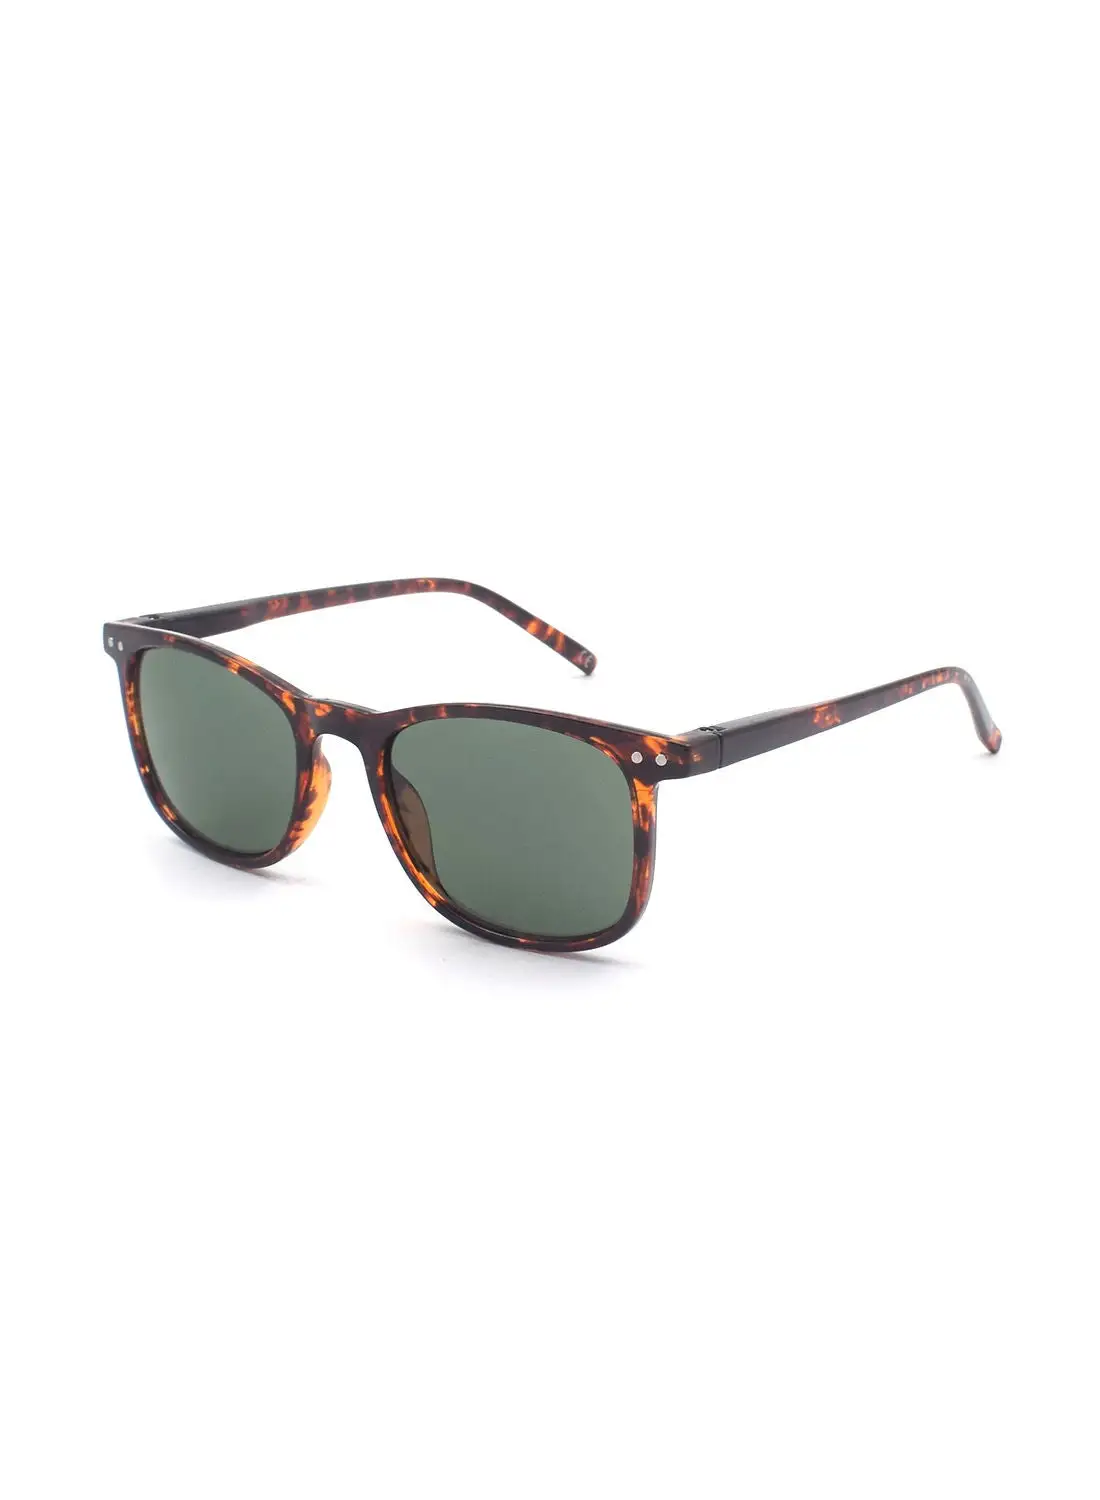 MADEYES Rectangular Sunglasses EE9S359-5